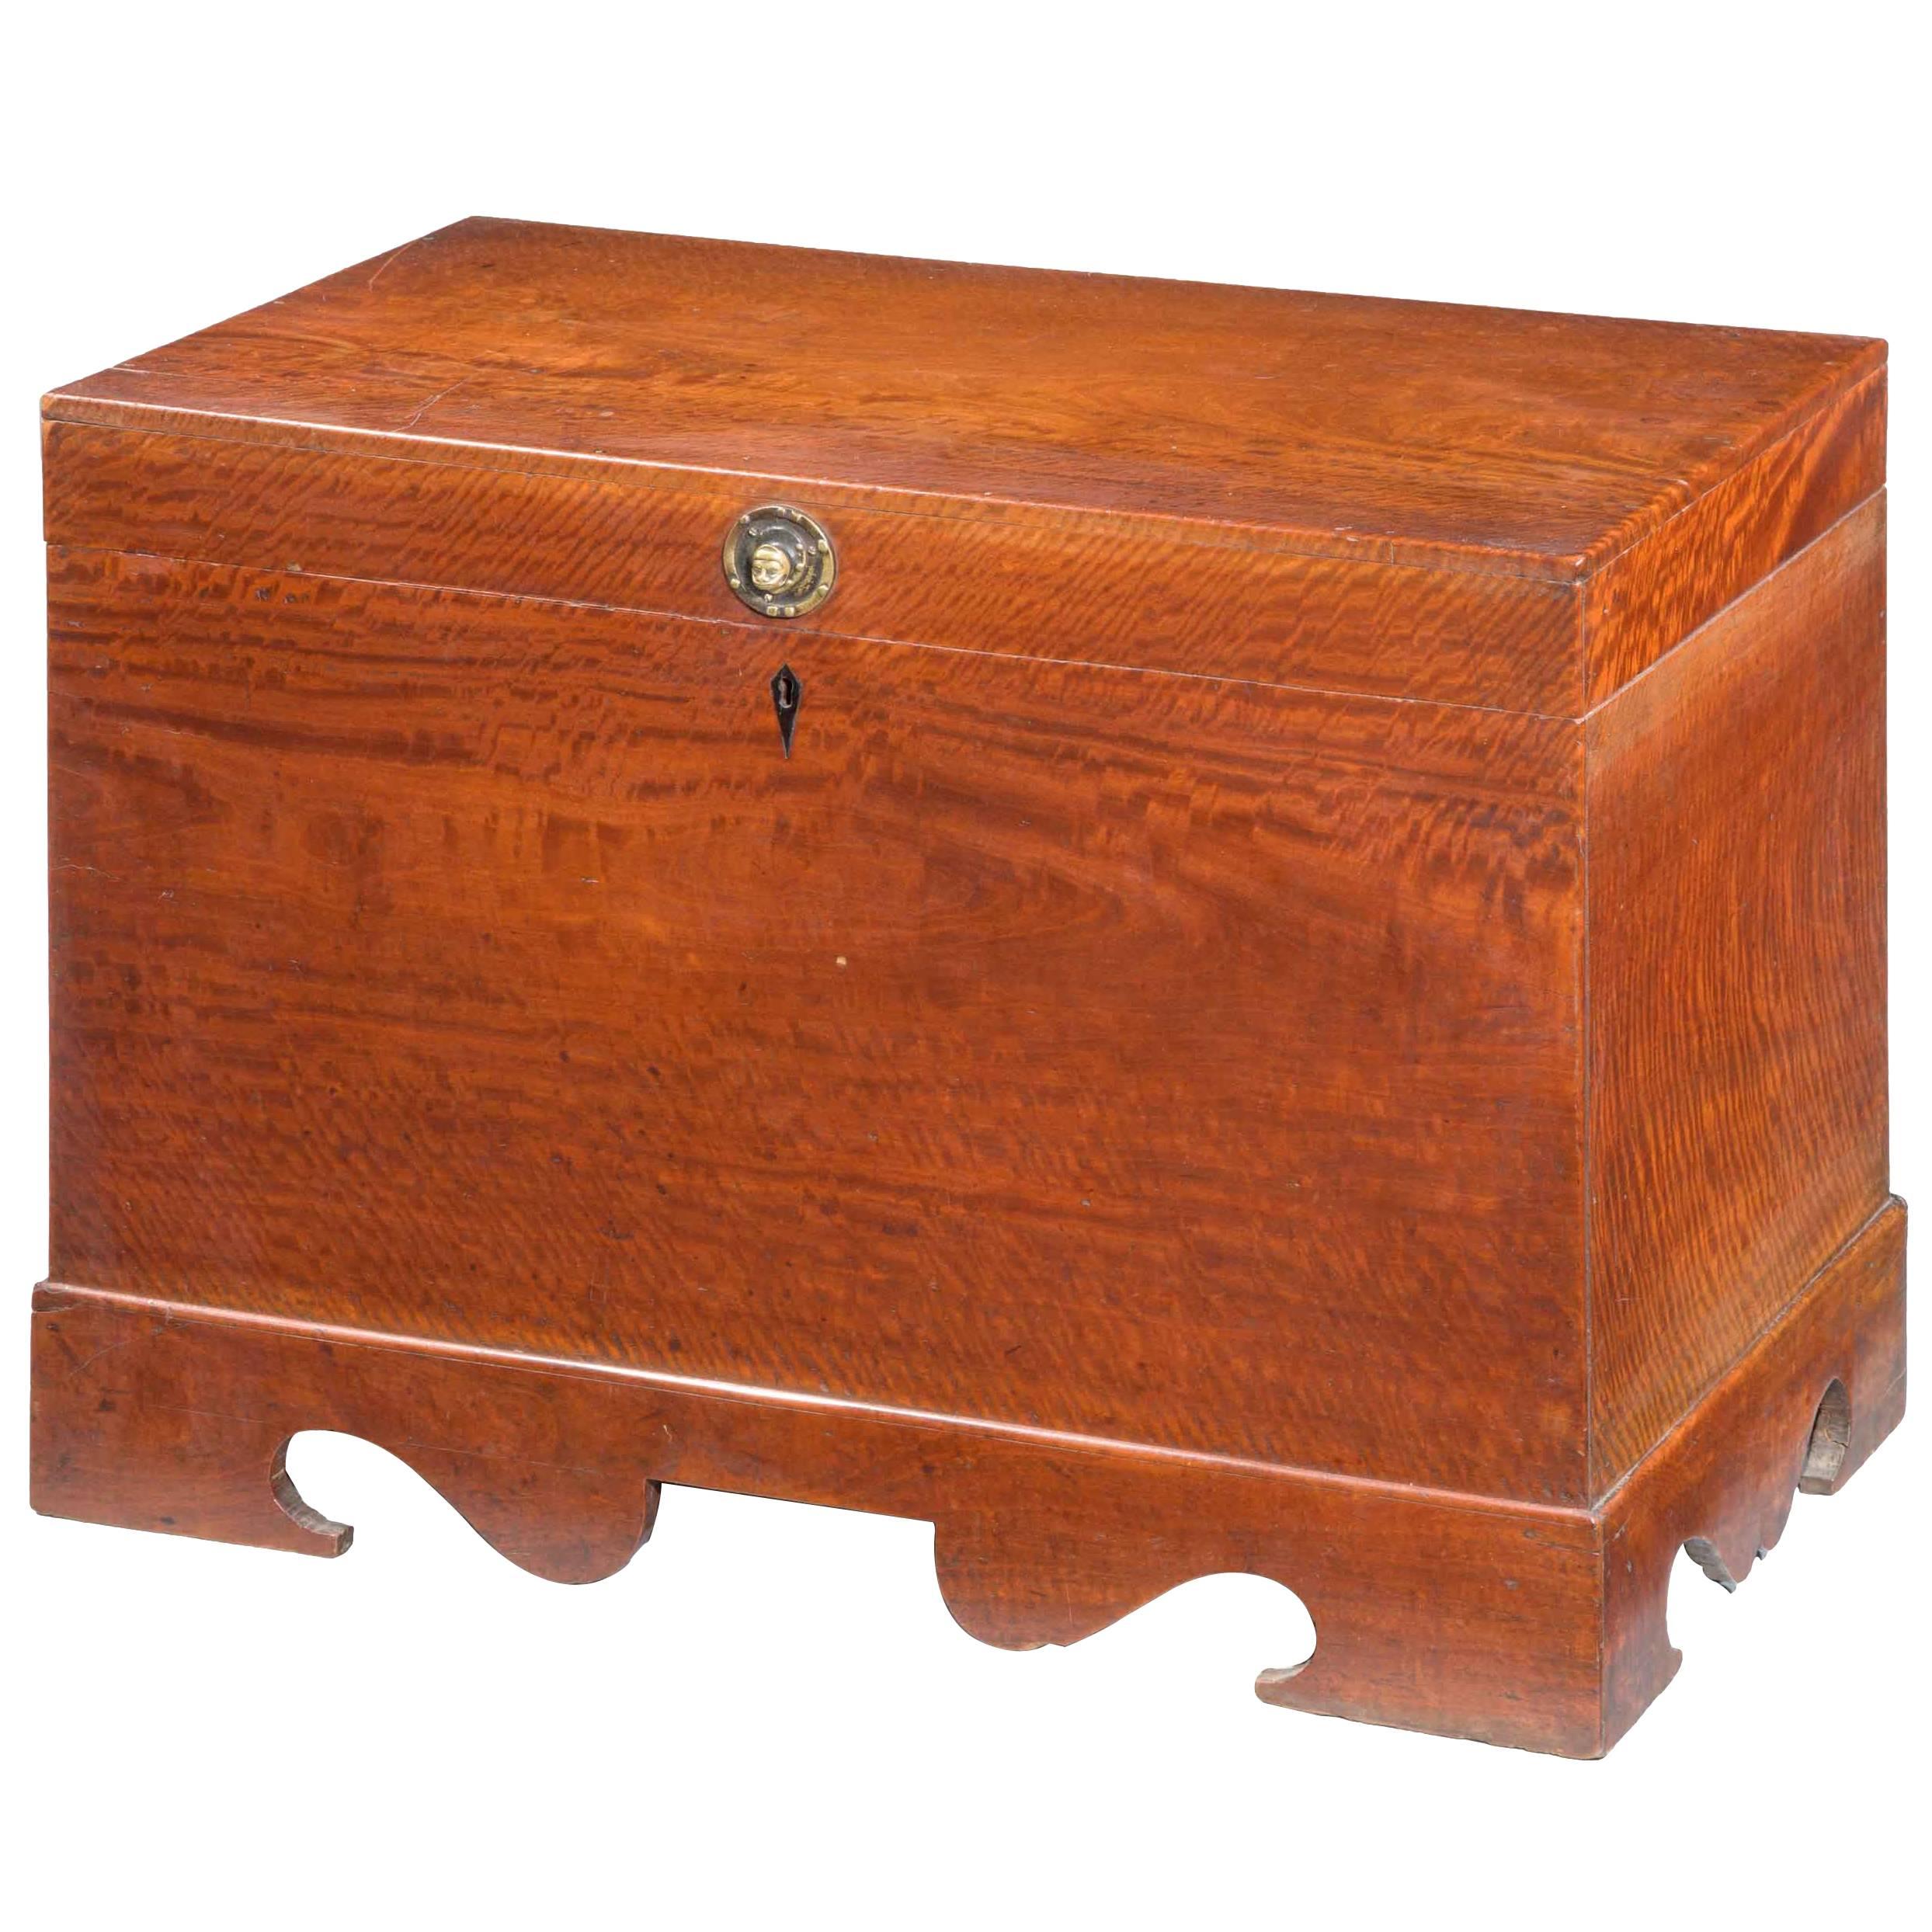 Mid-19th Century Teak Rectangular Lidded Box 